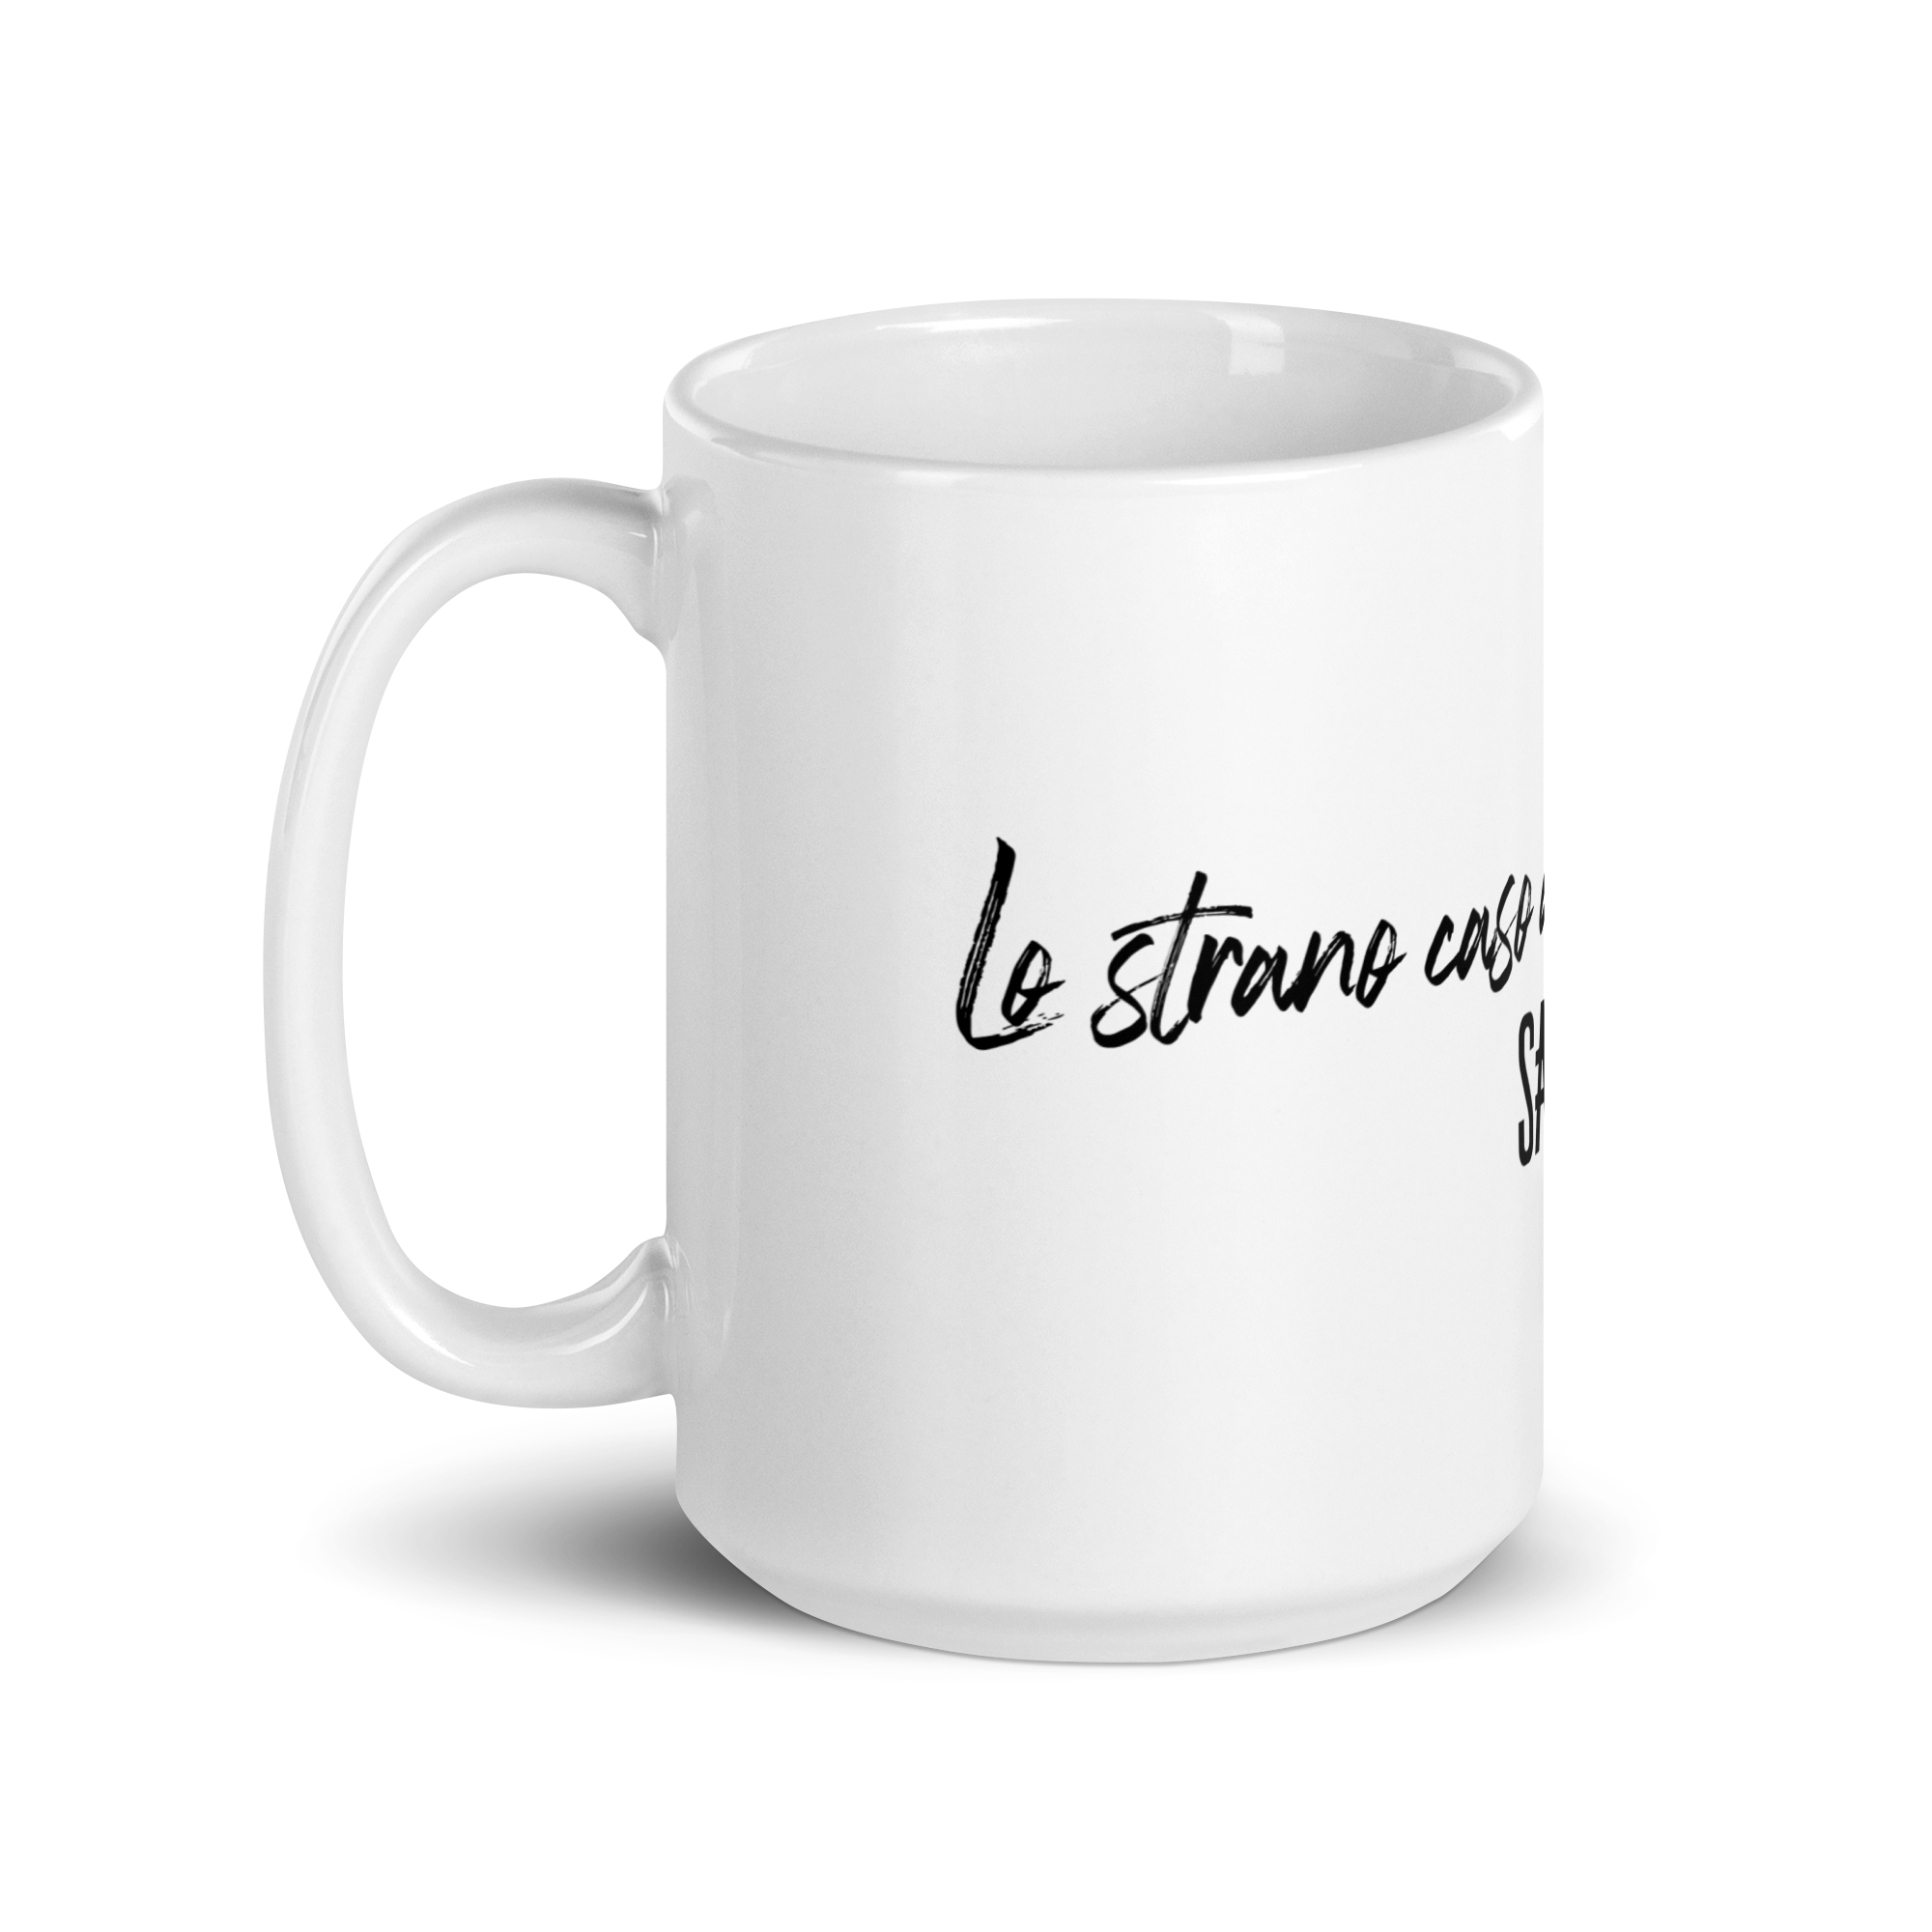 LO STRANO CASO - white glossy mug